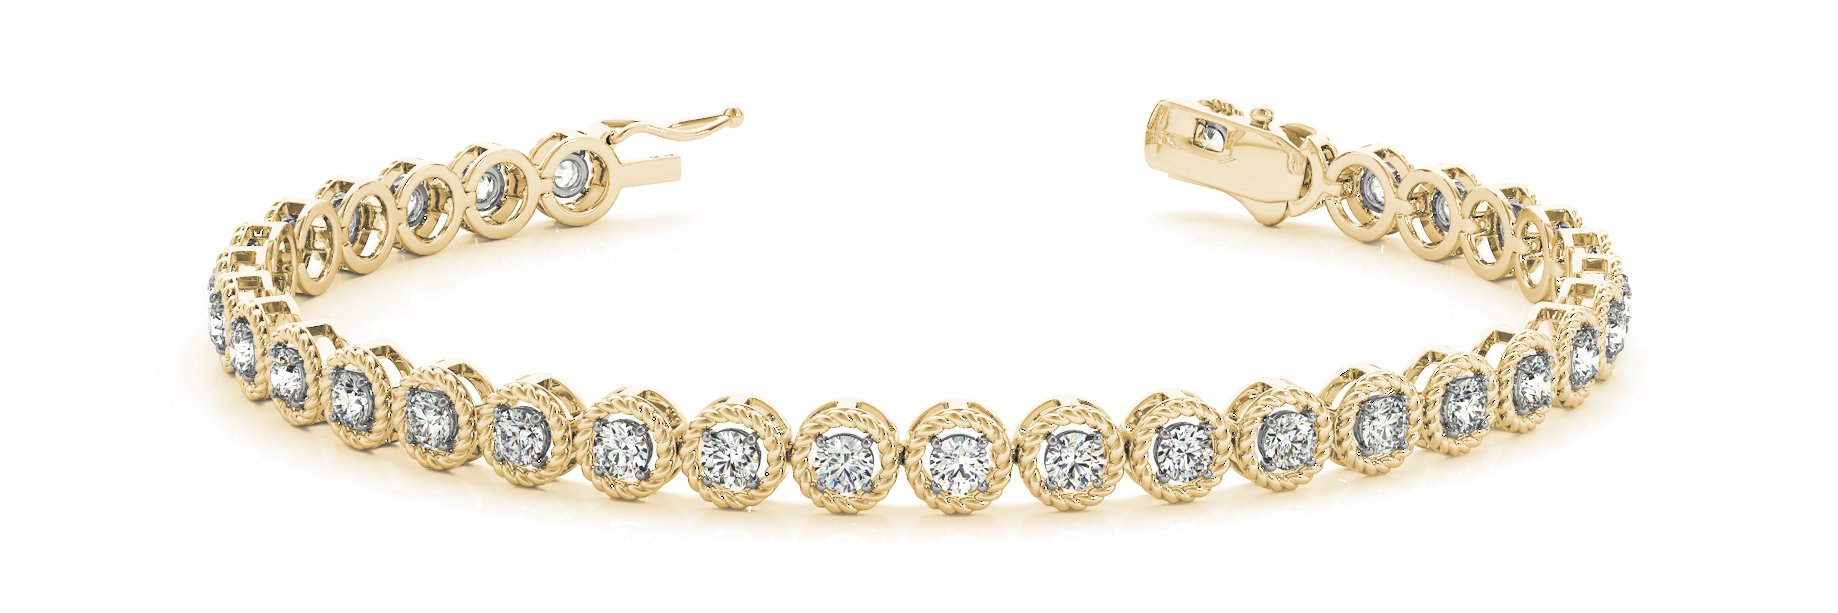 Fancy Diamond Bracelet Ladies 1.58ct tw - 14kt Yellow Gold